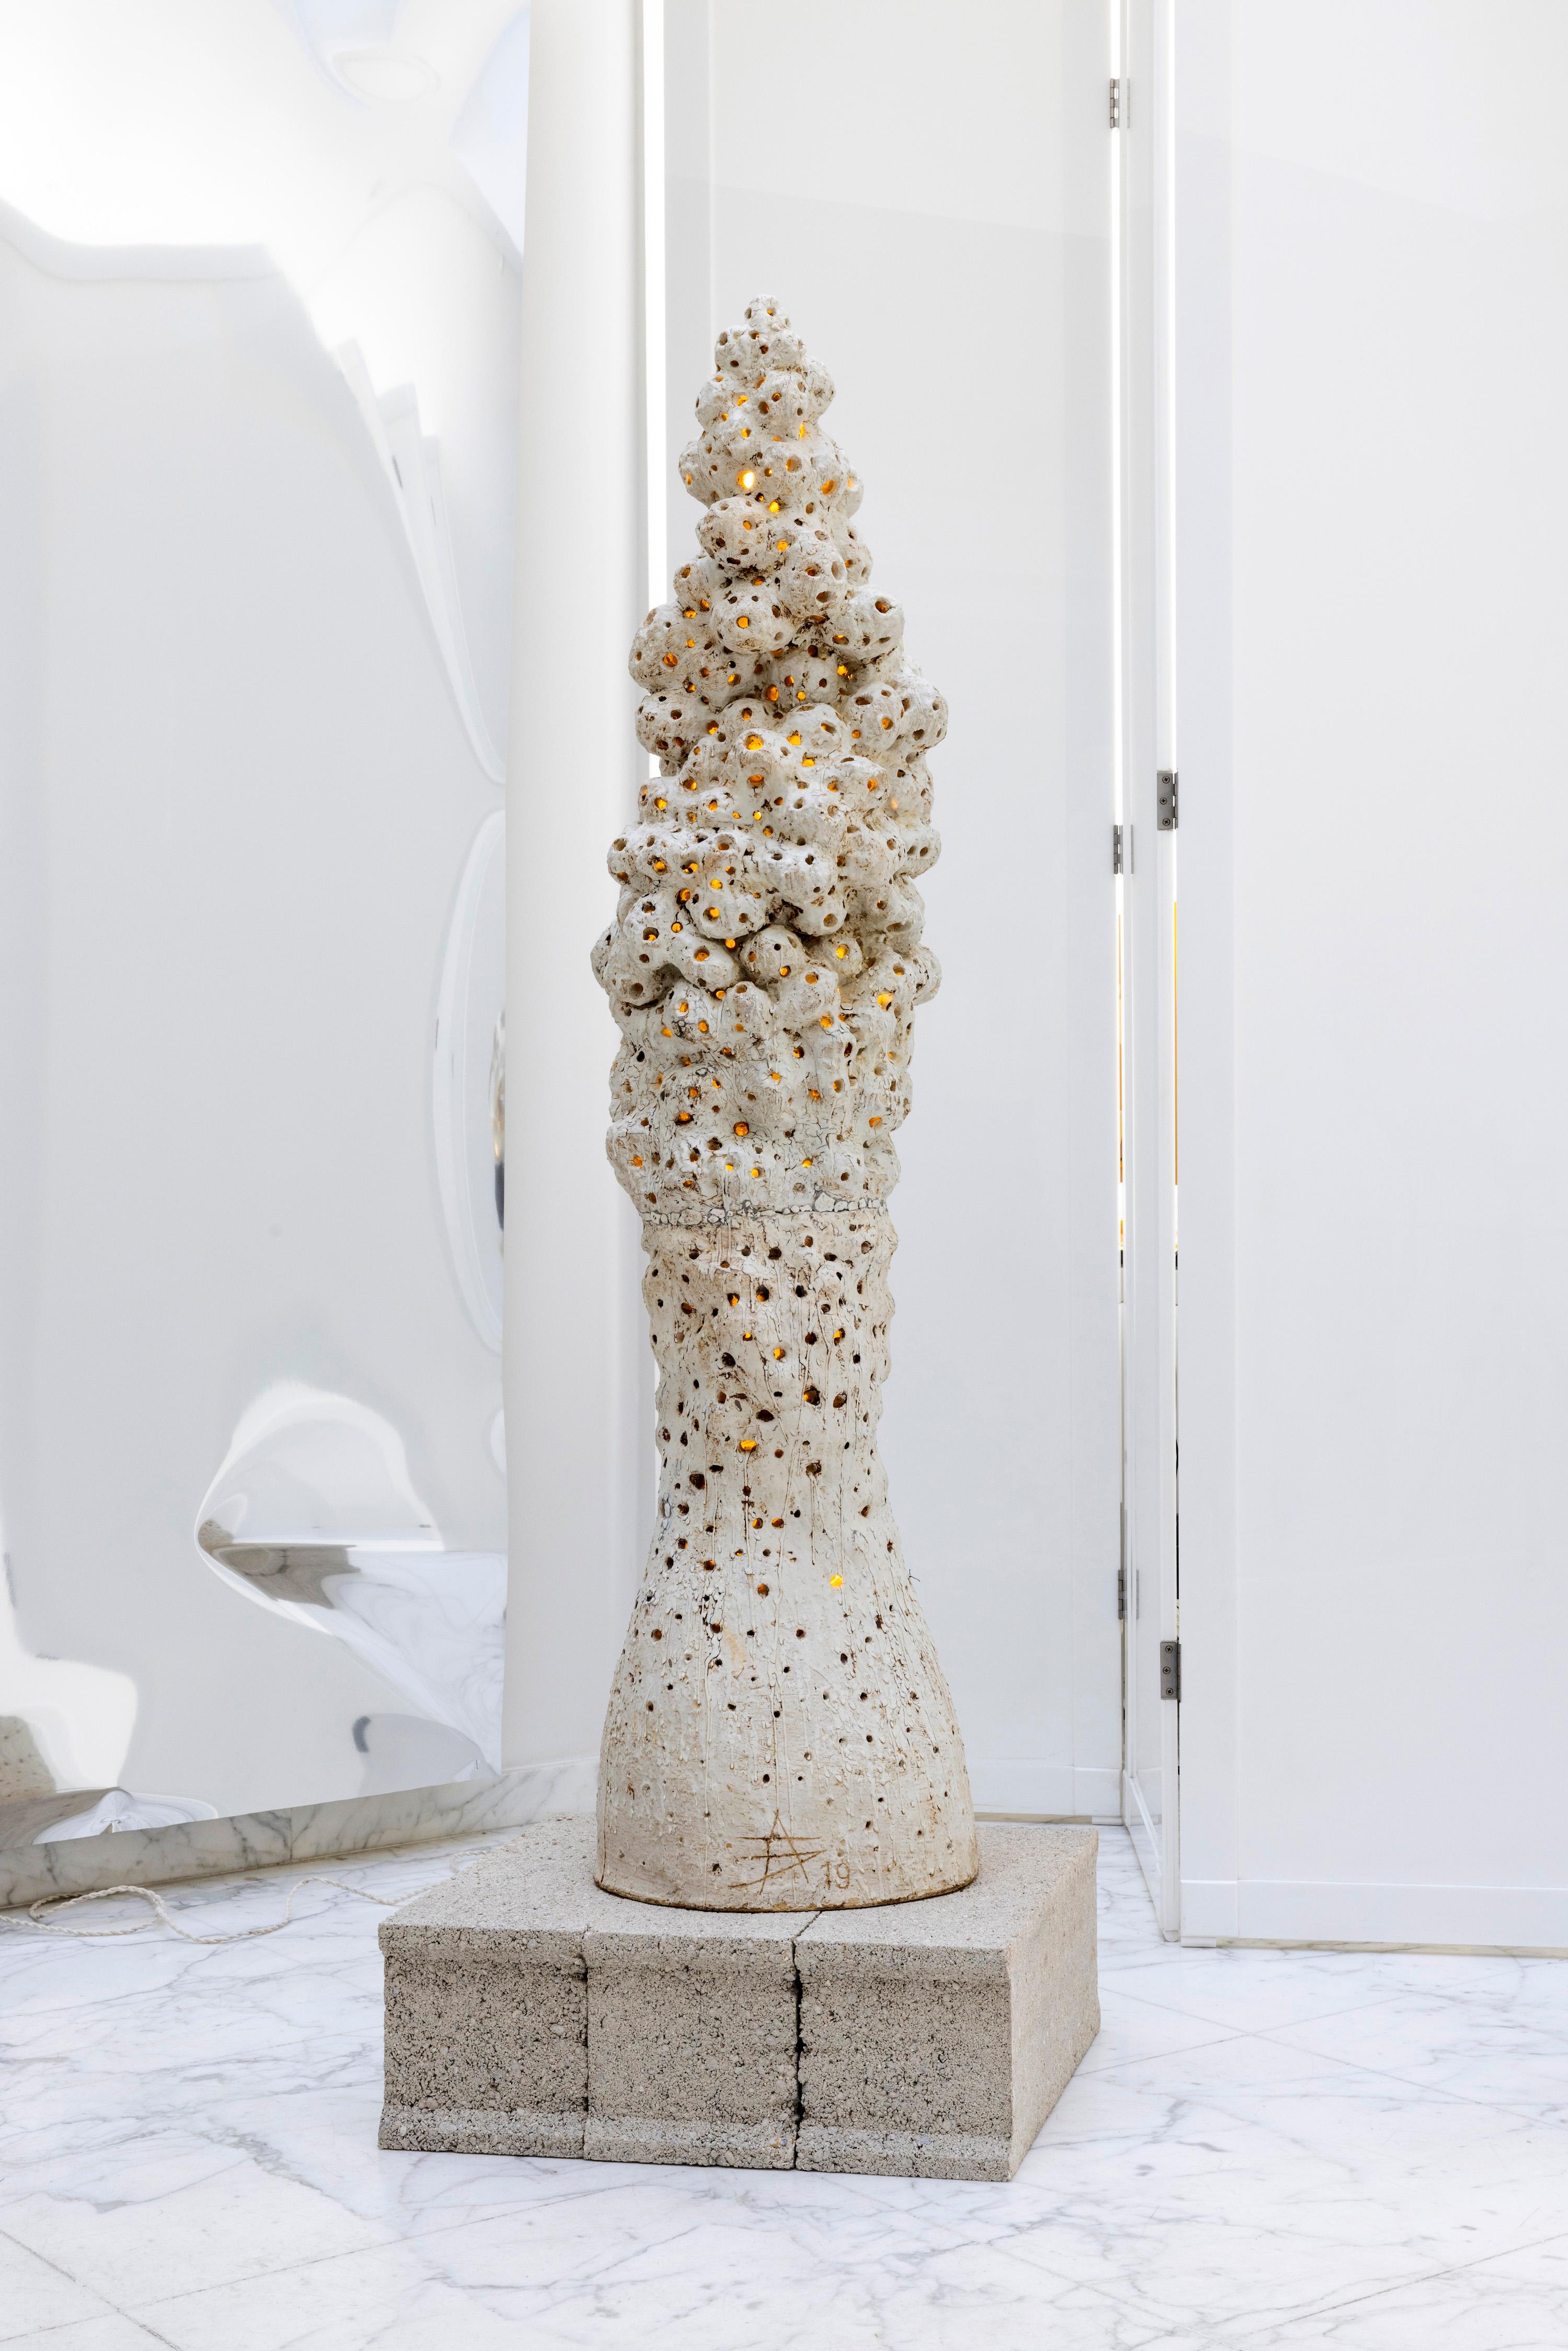 Organic Modern Contemporary Ceramic Floor Lamp Sculpture by Agnès Debizet, 2019 For Sale